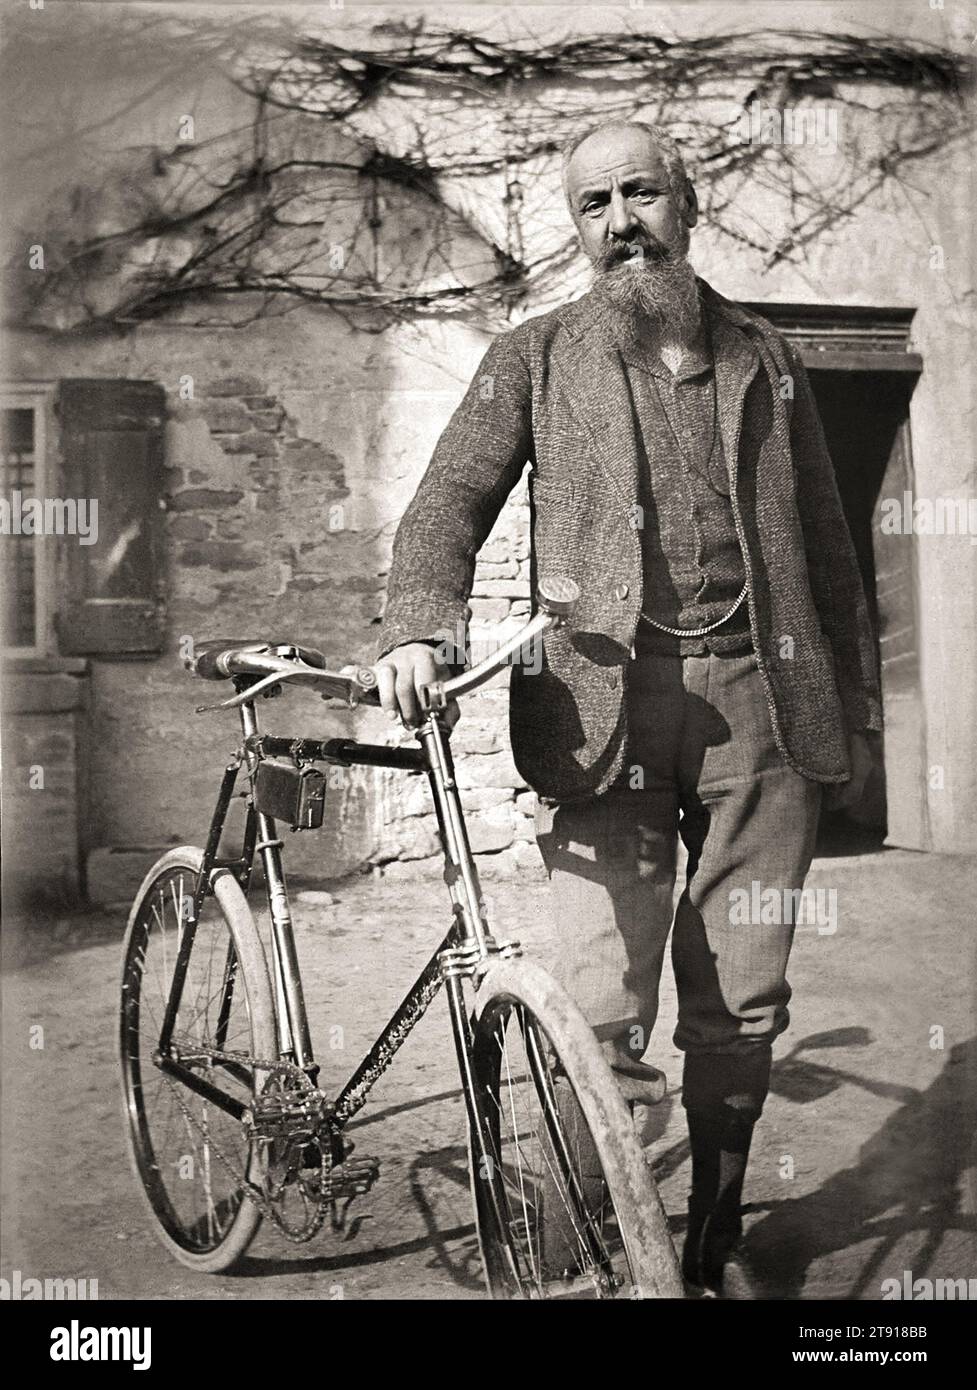 1909 c. , Faenza , Ravenna , ITALIEN : der italienische Schriftsteller , Dichter und Sozialkritiker ALFREDO ORIANI ( 1852 - 1909 ) . Foto von Selmi, Faenza . - LETTERATURA - LITTERATUR - LETTERATO - SCRITTORE - POET - POESIE - POESIE - POETA - SOCIOLOGO CRITICO - SOZIOLOGIE - SOCIOLOGIA - Bart - barba - bicicletta - Fahrrad - campagna - Land - Emilia Romagna - ITALIA - GESCHICHTE - Foto STORICHE - ciclista - ciclismo --- Archivio GBB Stockfoto